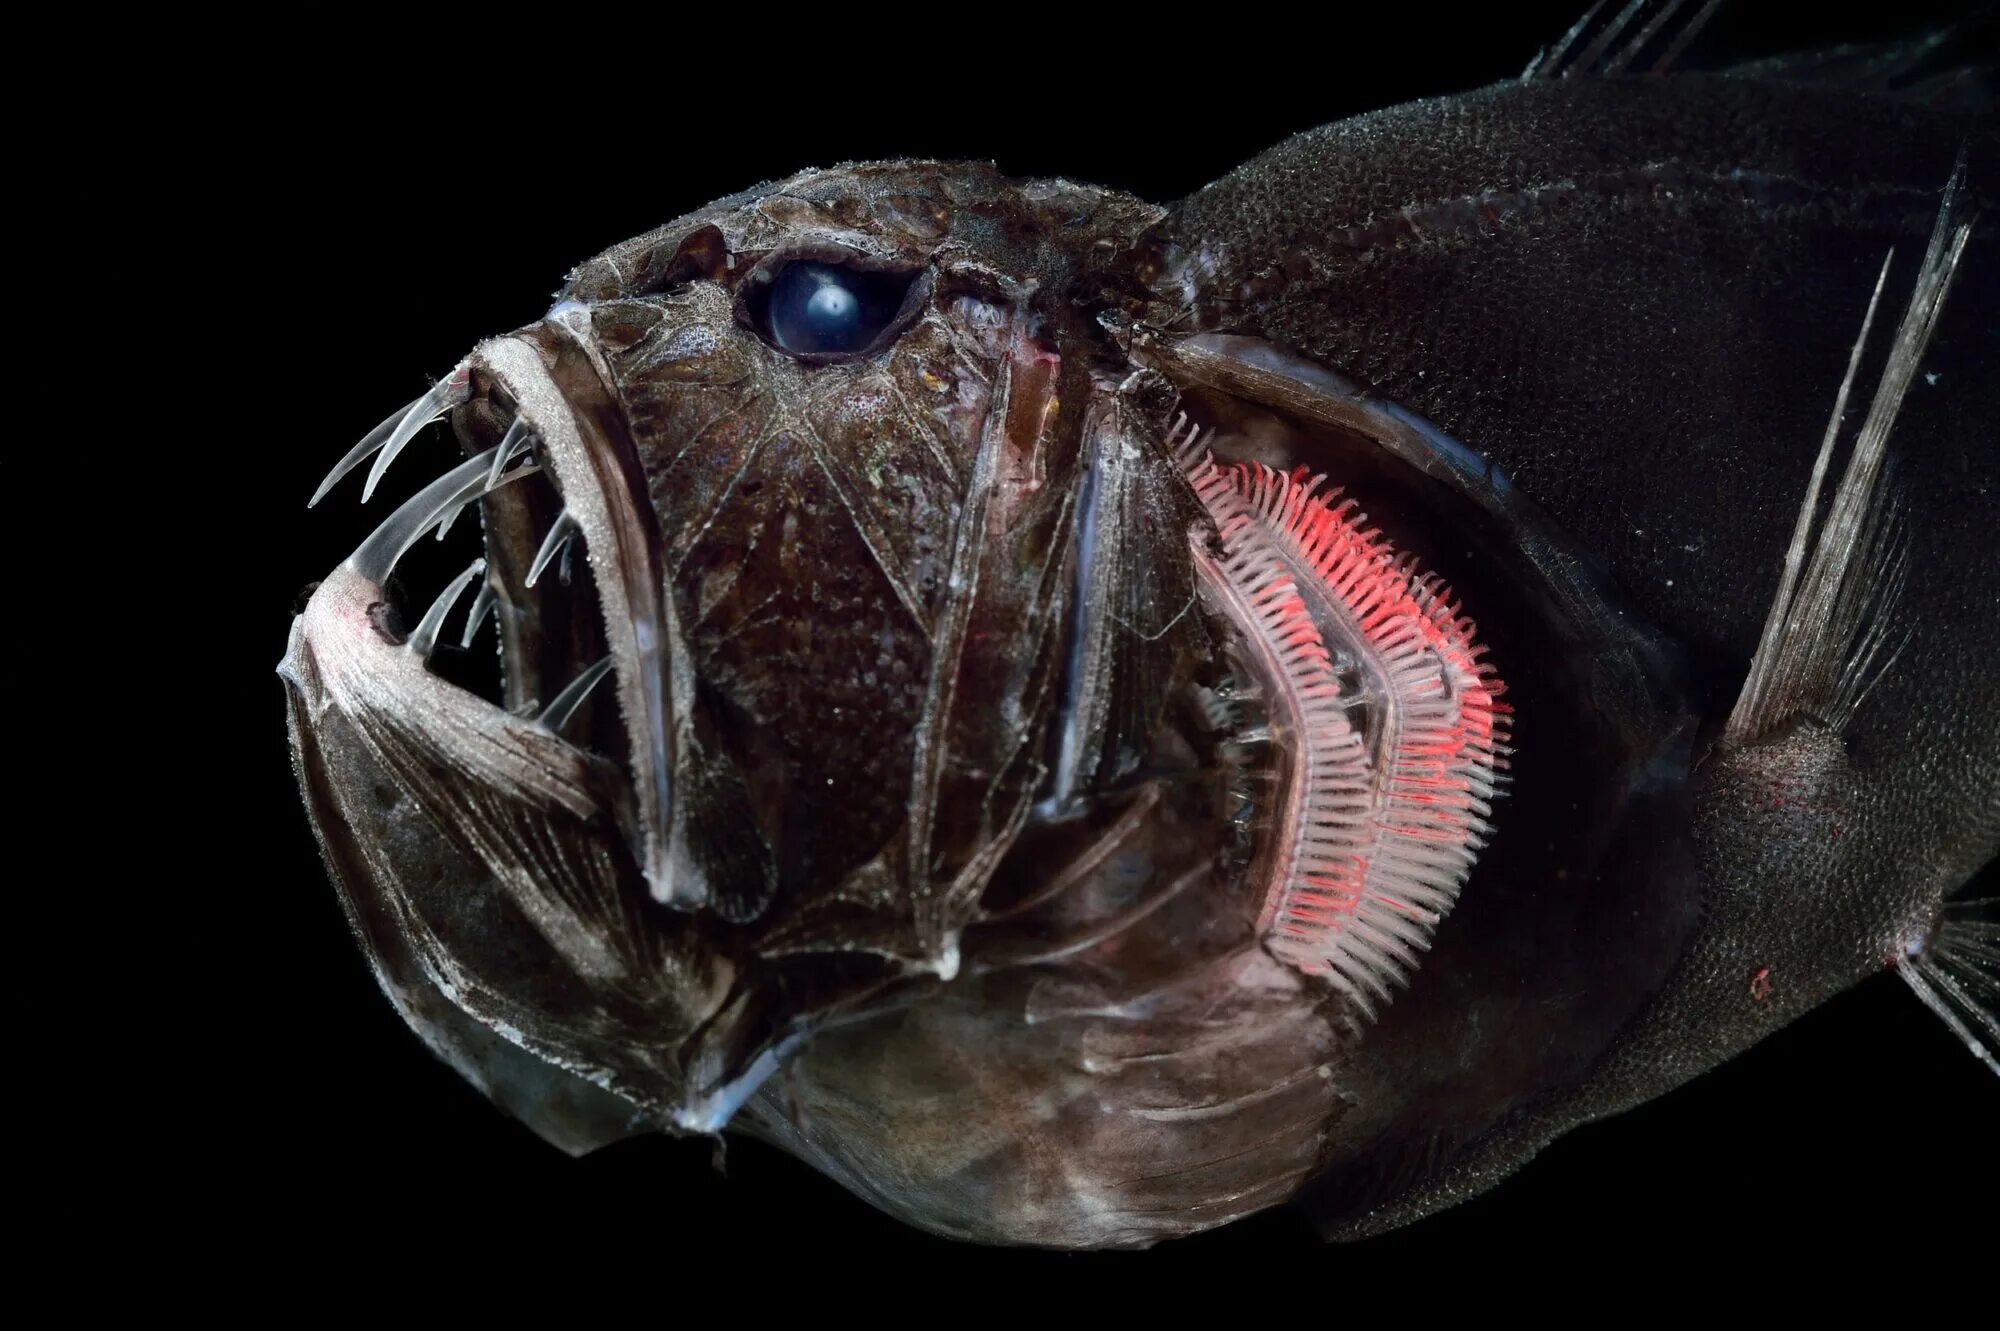 Fish creature. Длиннорогий Саблезуб. Тихоокеанский идиакант. Длиннорогий Саблезуб рыба. Саблезуб (Anoplogaster cornuta).